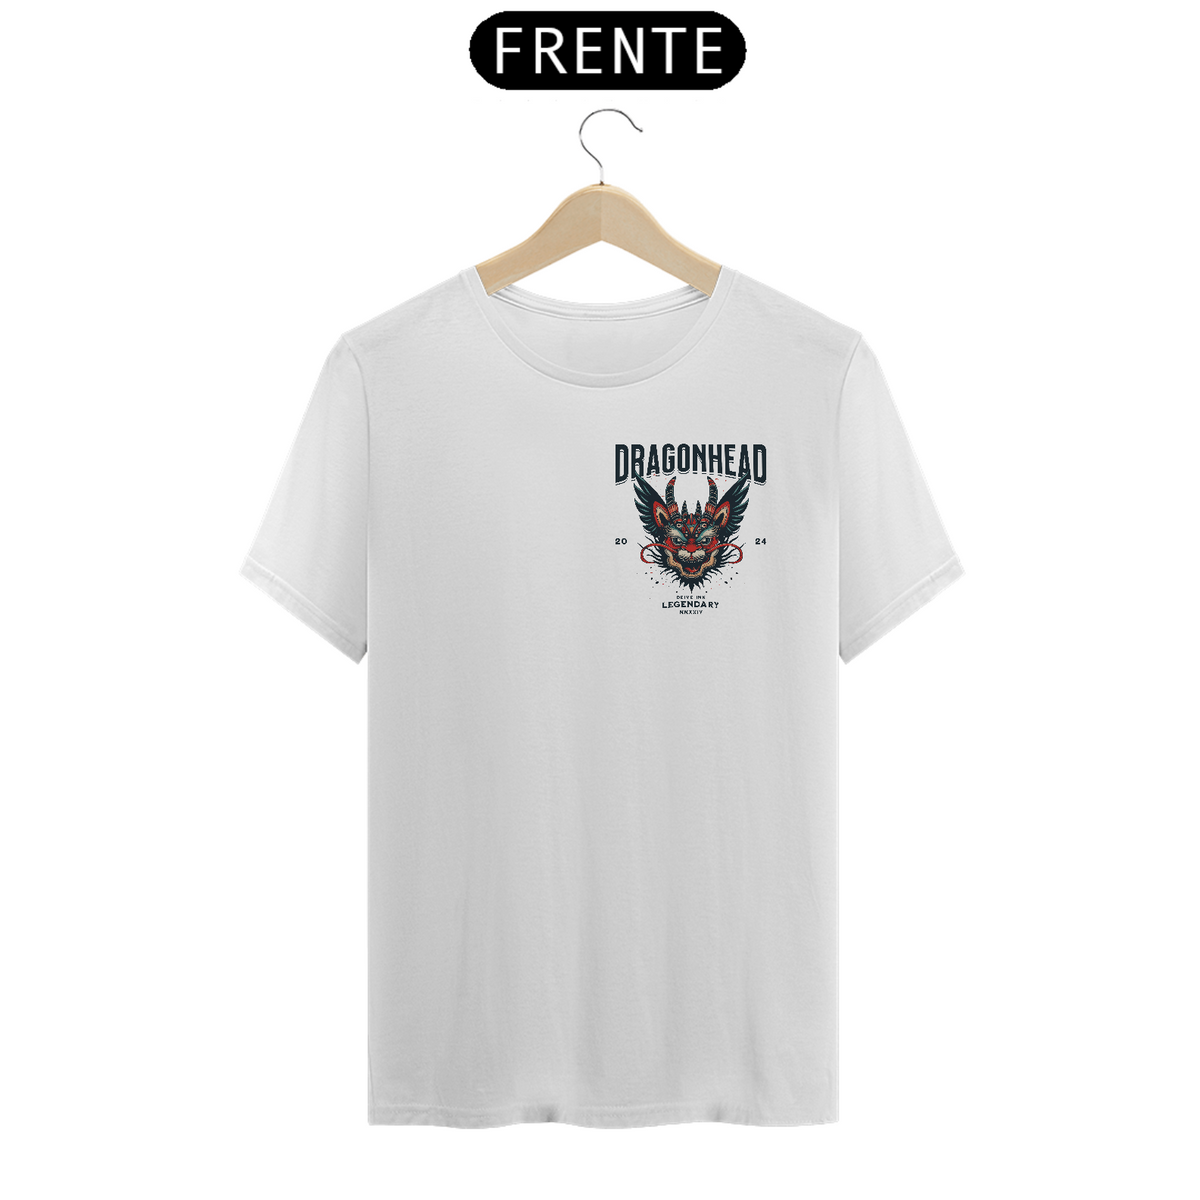 Nome do produto: Camiseta Dragonhead Streetwear